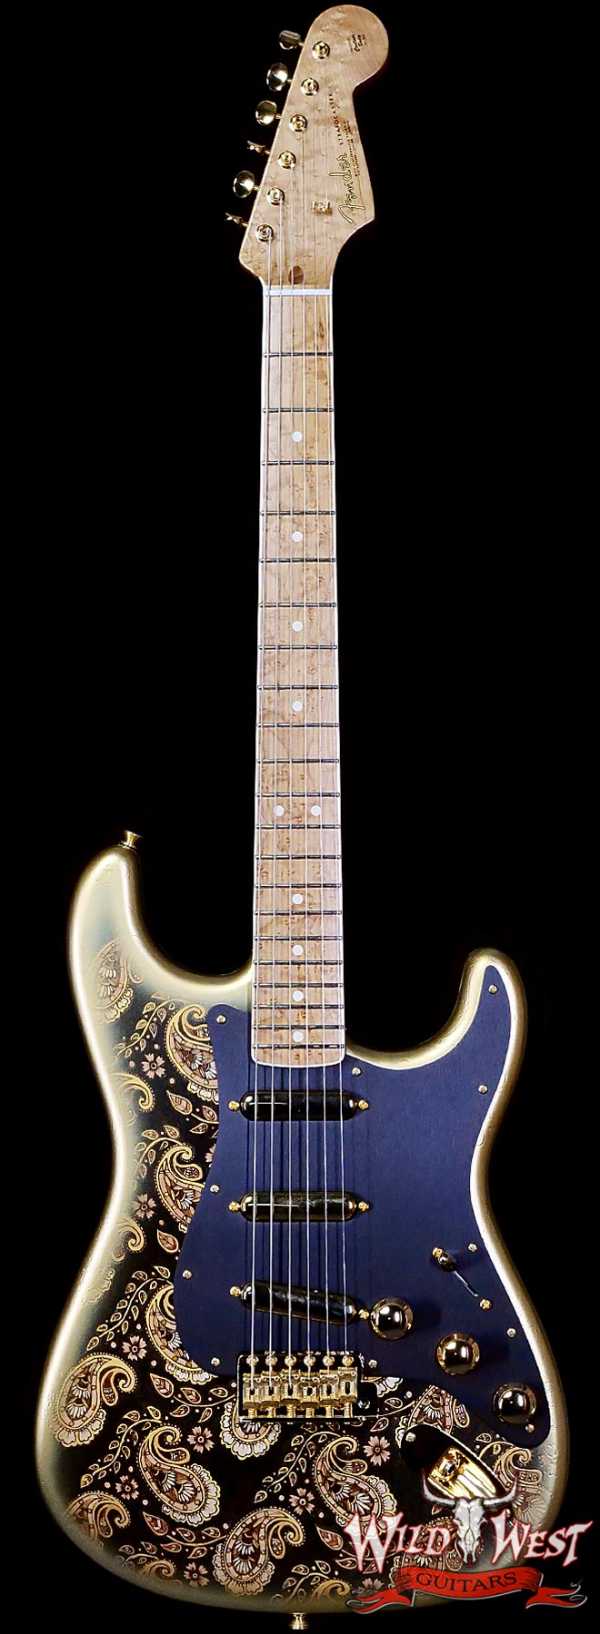 Fender Custom Shop Kyle McMillin Masterbuilt Wood Burnt 1963 Stratocaster Artwork by Madeline Hanlon 7.65 LBS